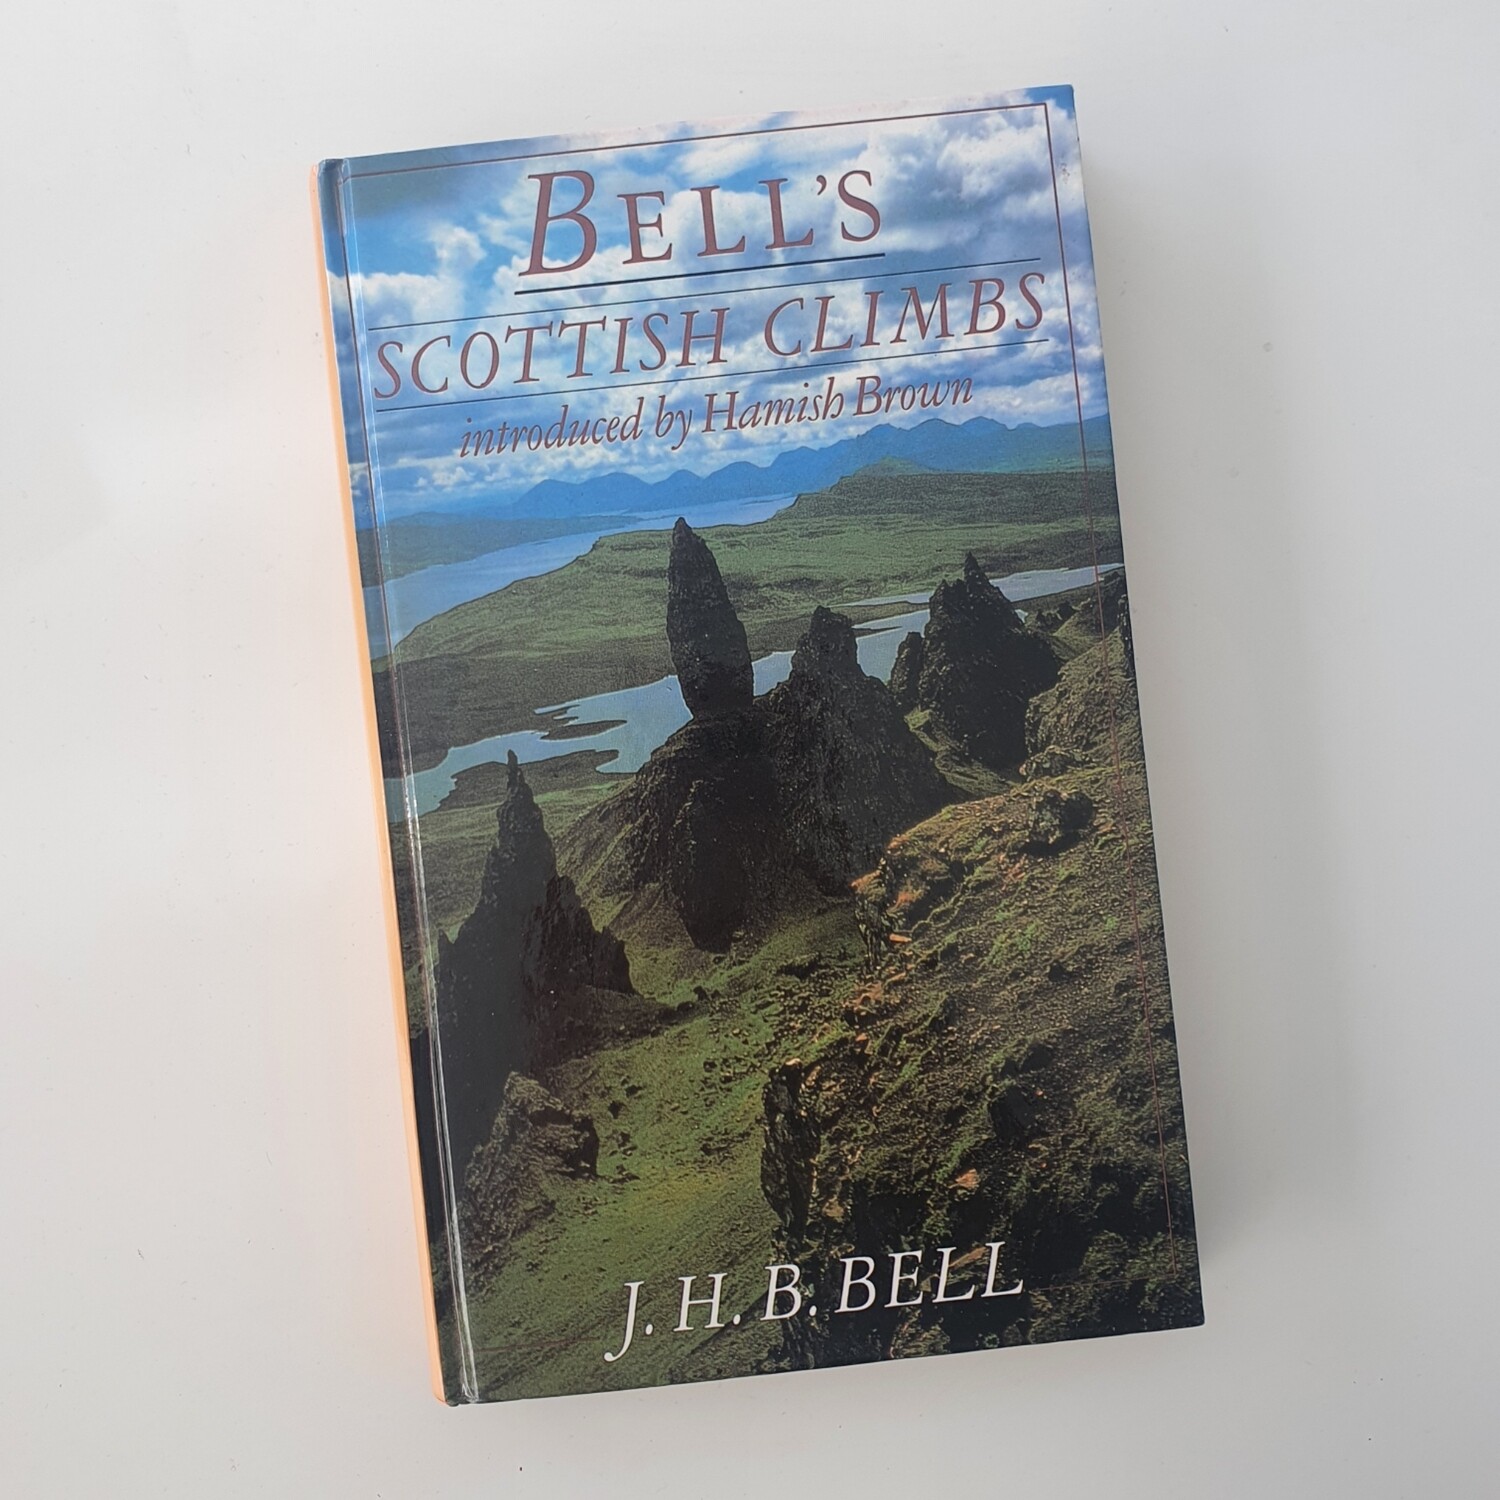 Bell's Scottish Climbs, Scotland